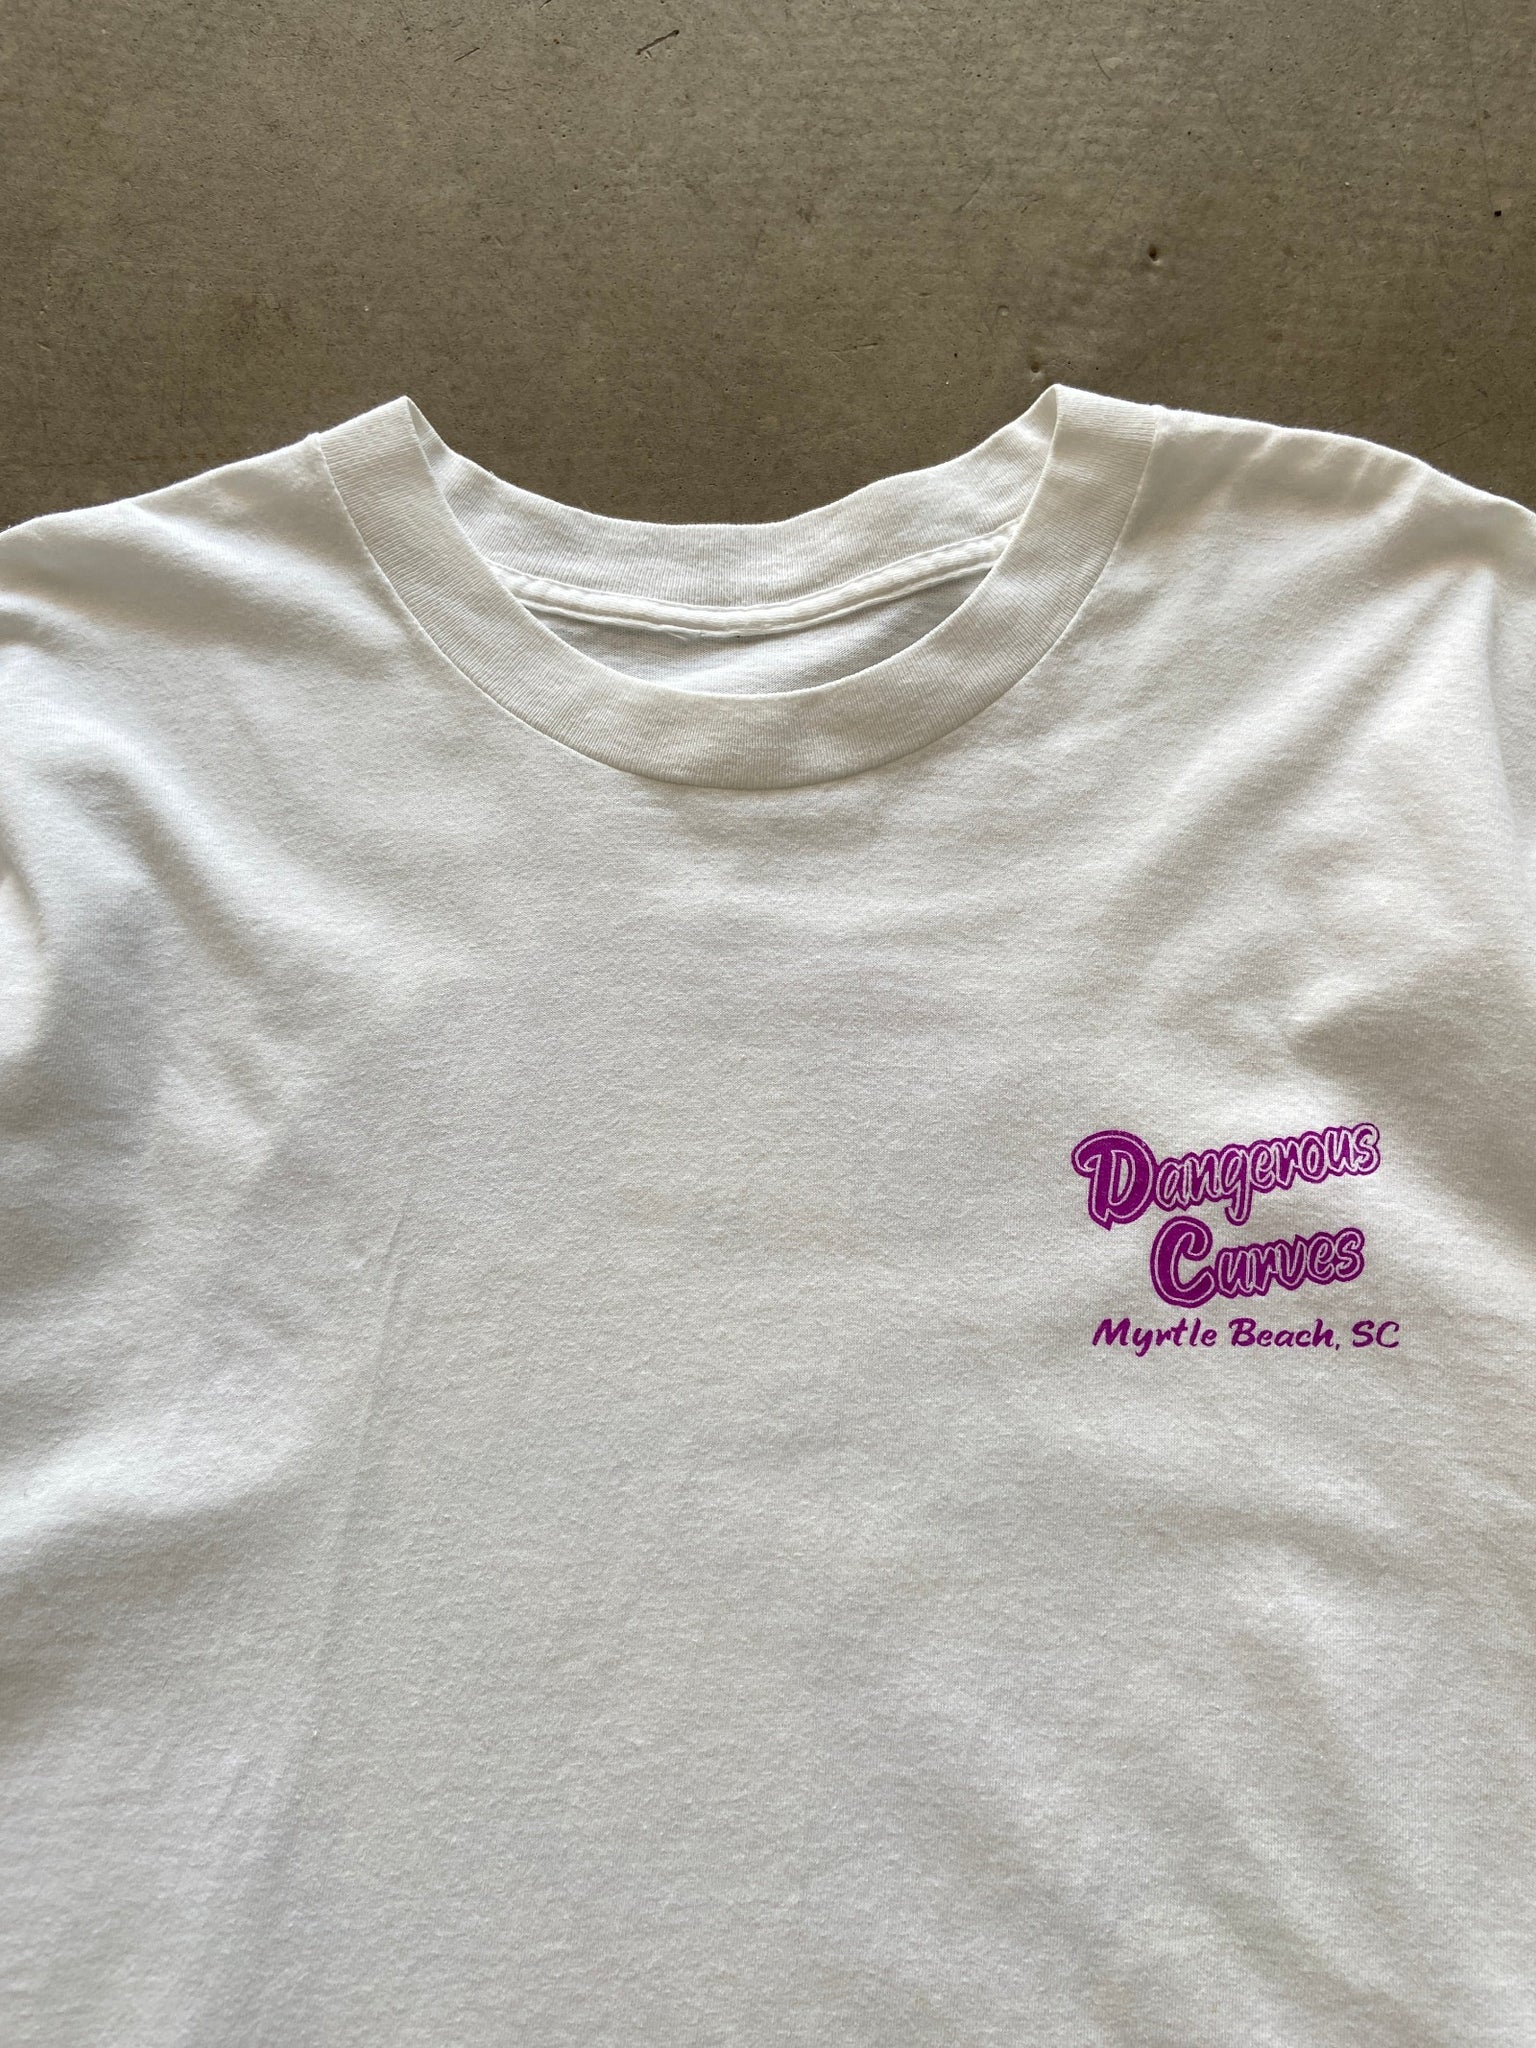 1990's Dangerous Curves Gentleman's Club T-Shirt - XL